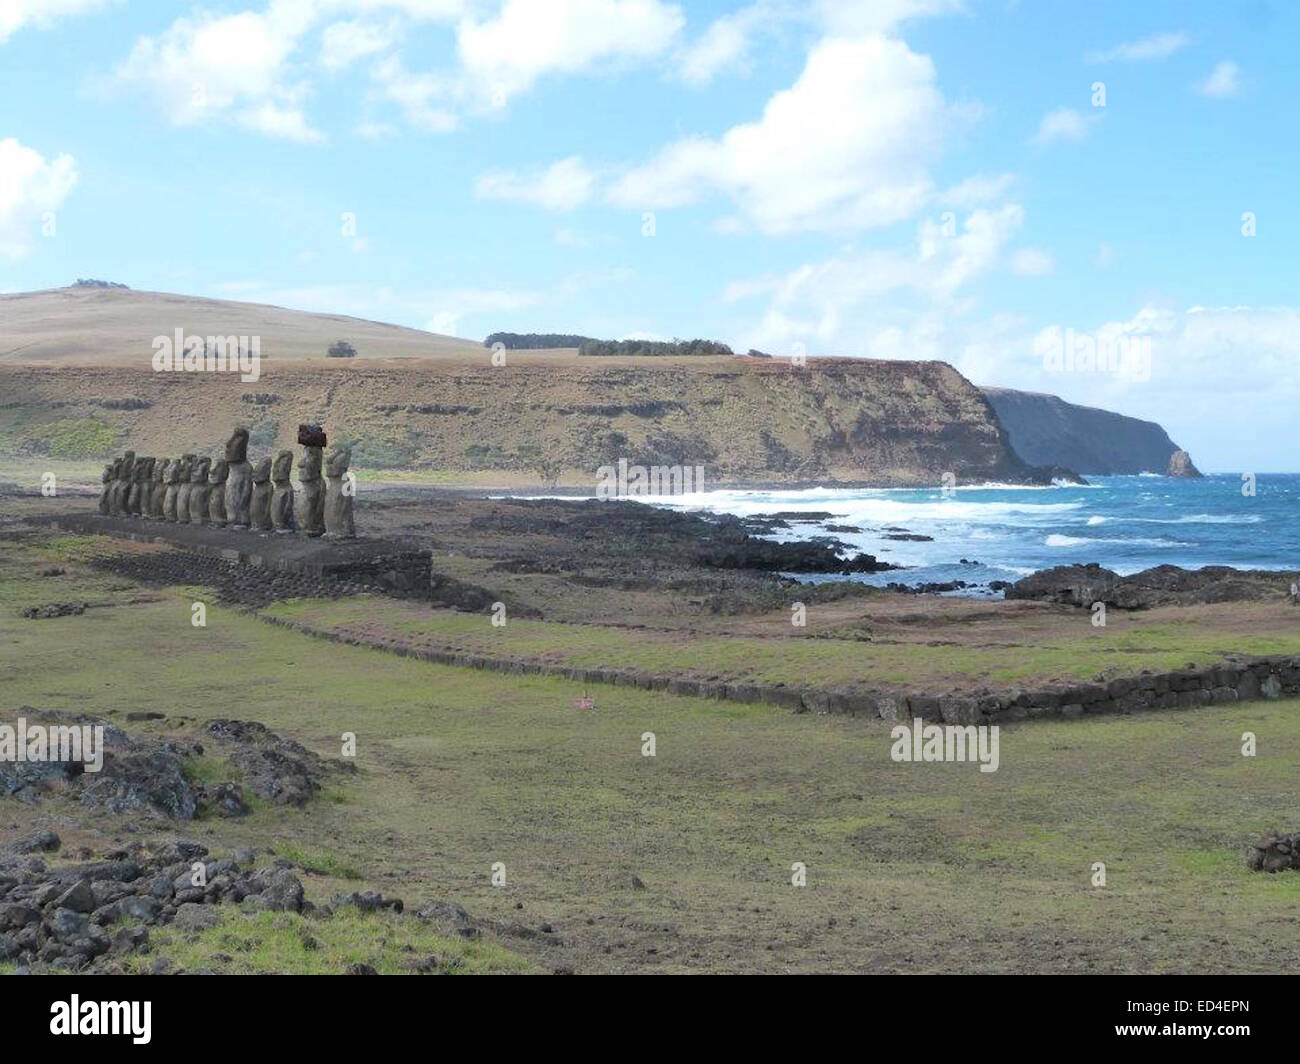 The giant, stone Moai statues at Ahu Tongariki, Rapa Nui (Easter Island), Chile Stock Photo